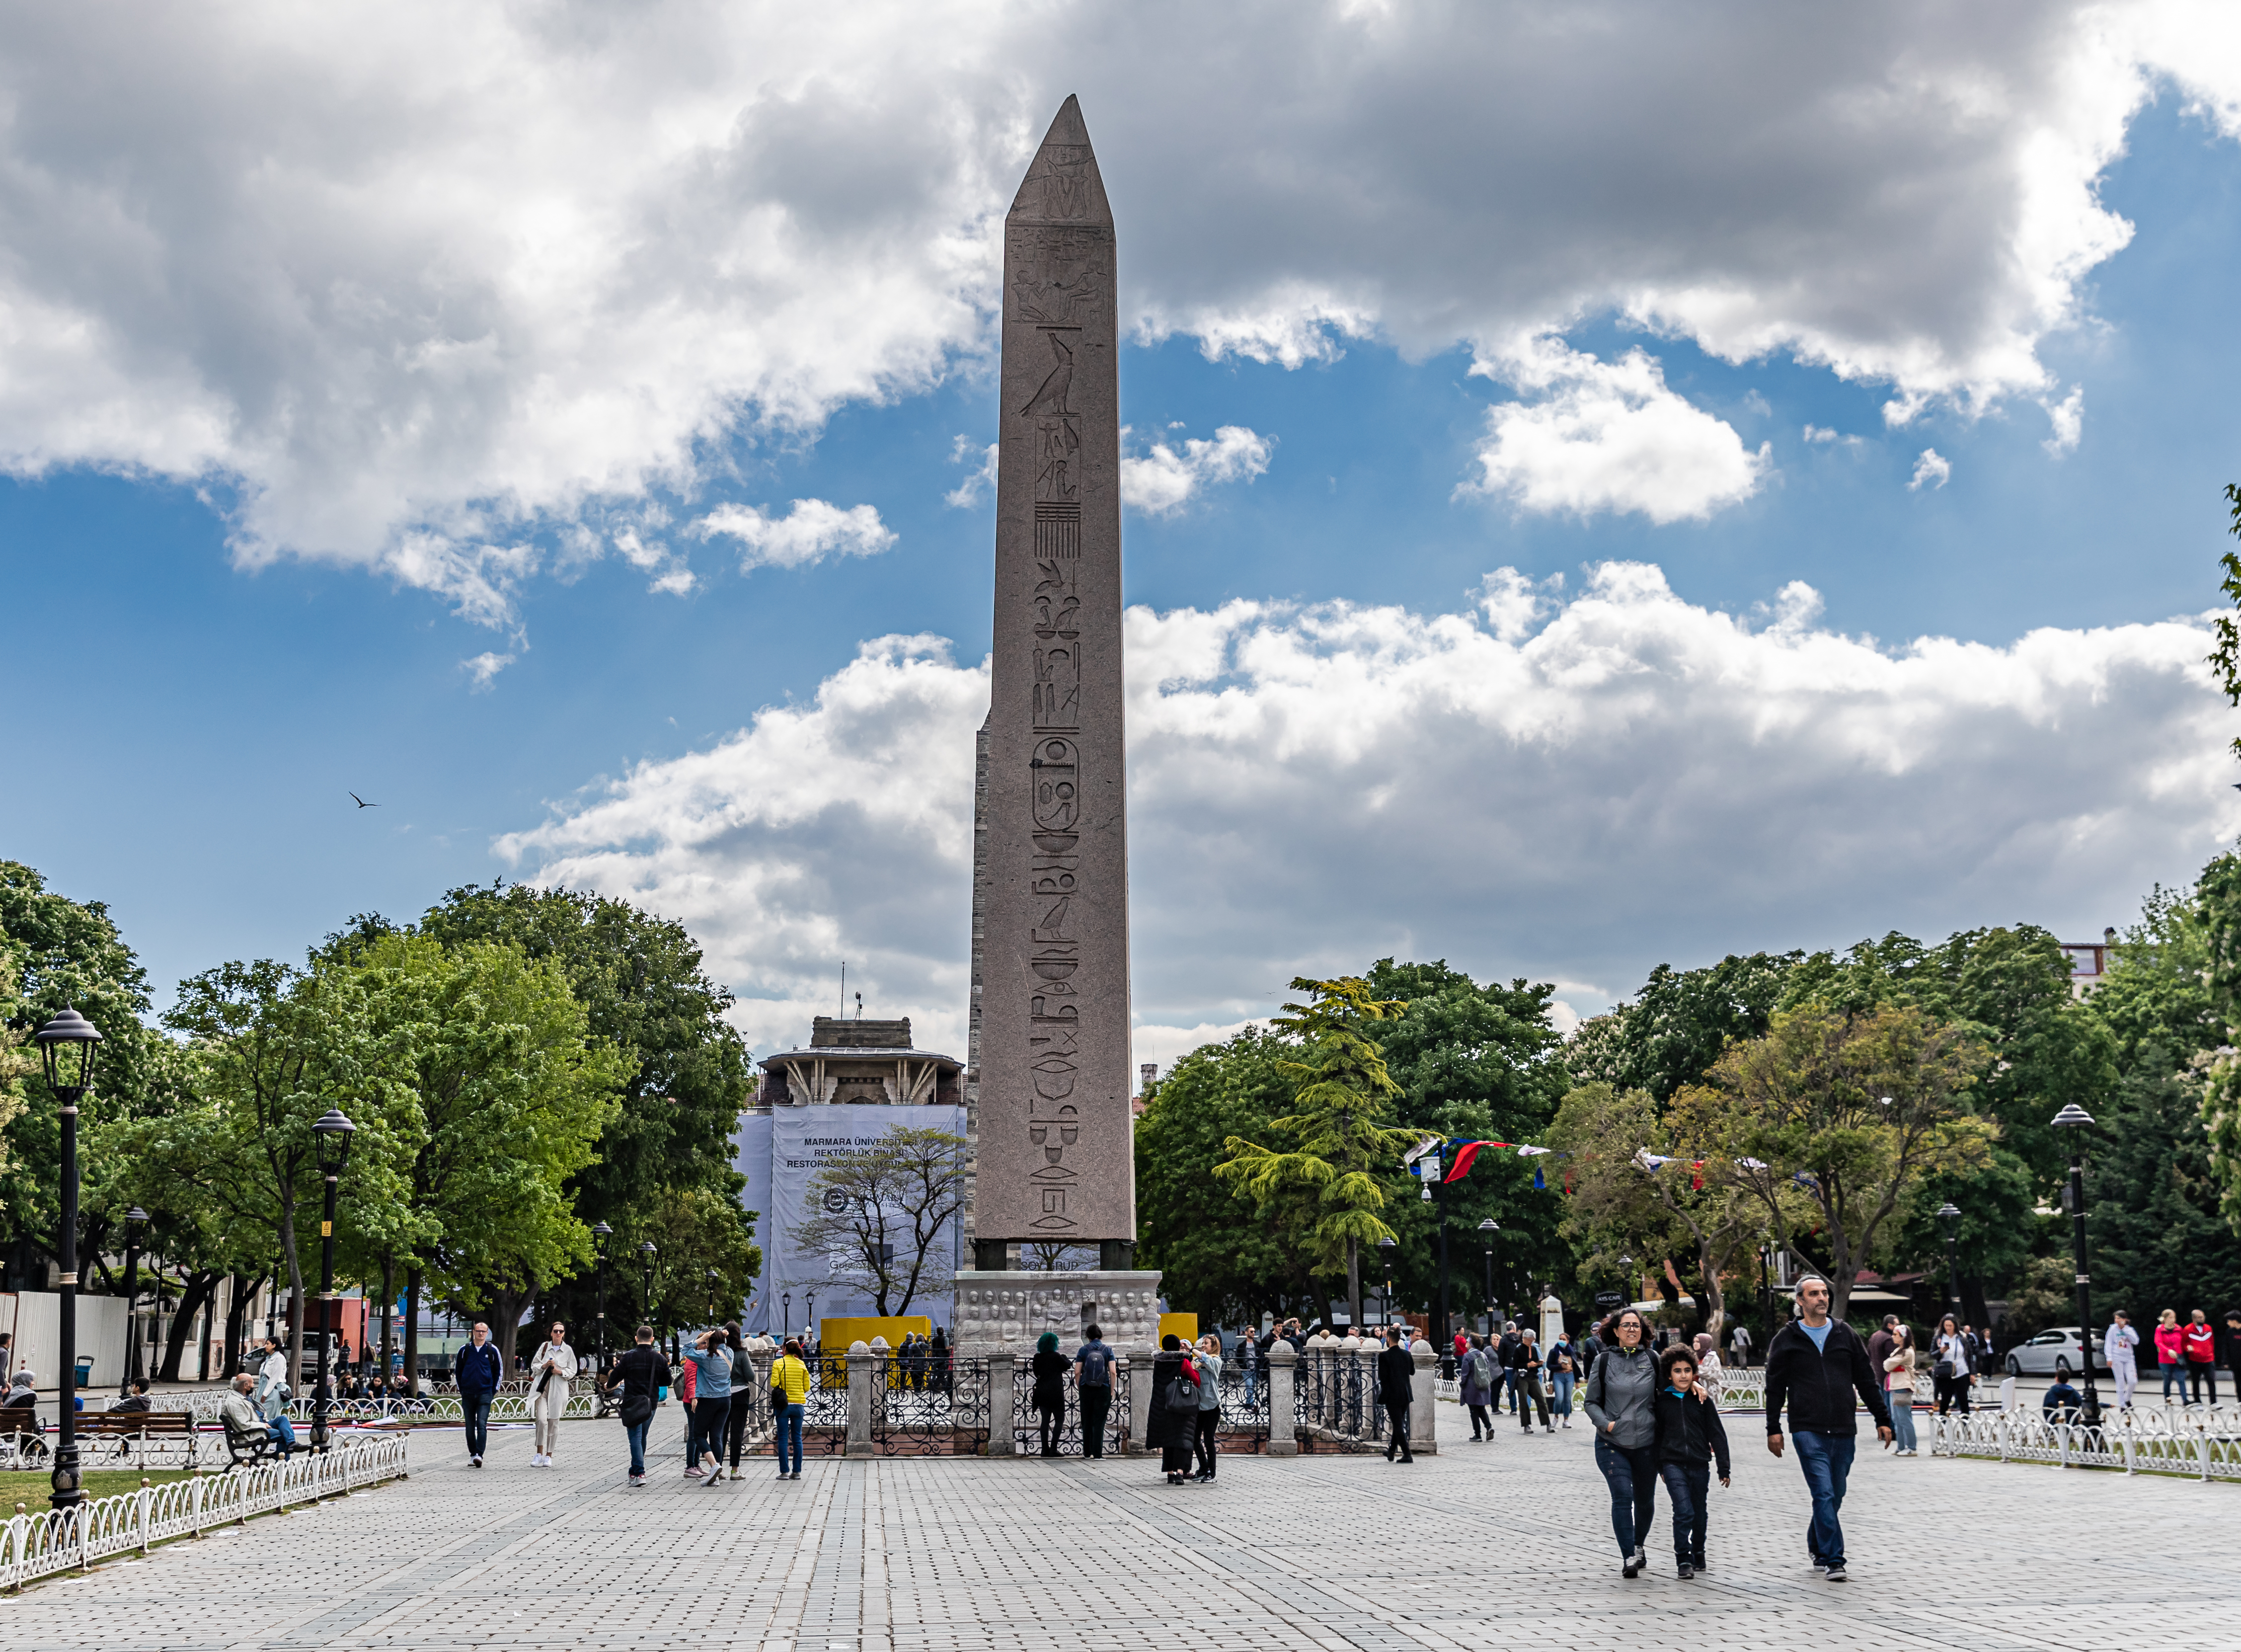 File:Sultanahmet Square, Obelisk of Theodosius, Istanbul (52121868925).jpg  - Wikimedia Commons